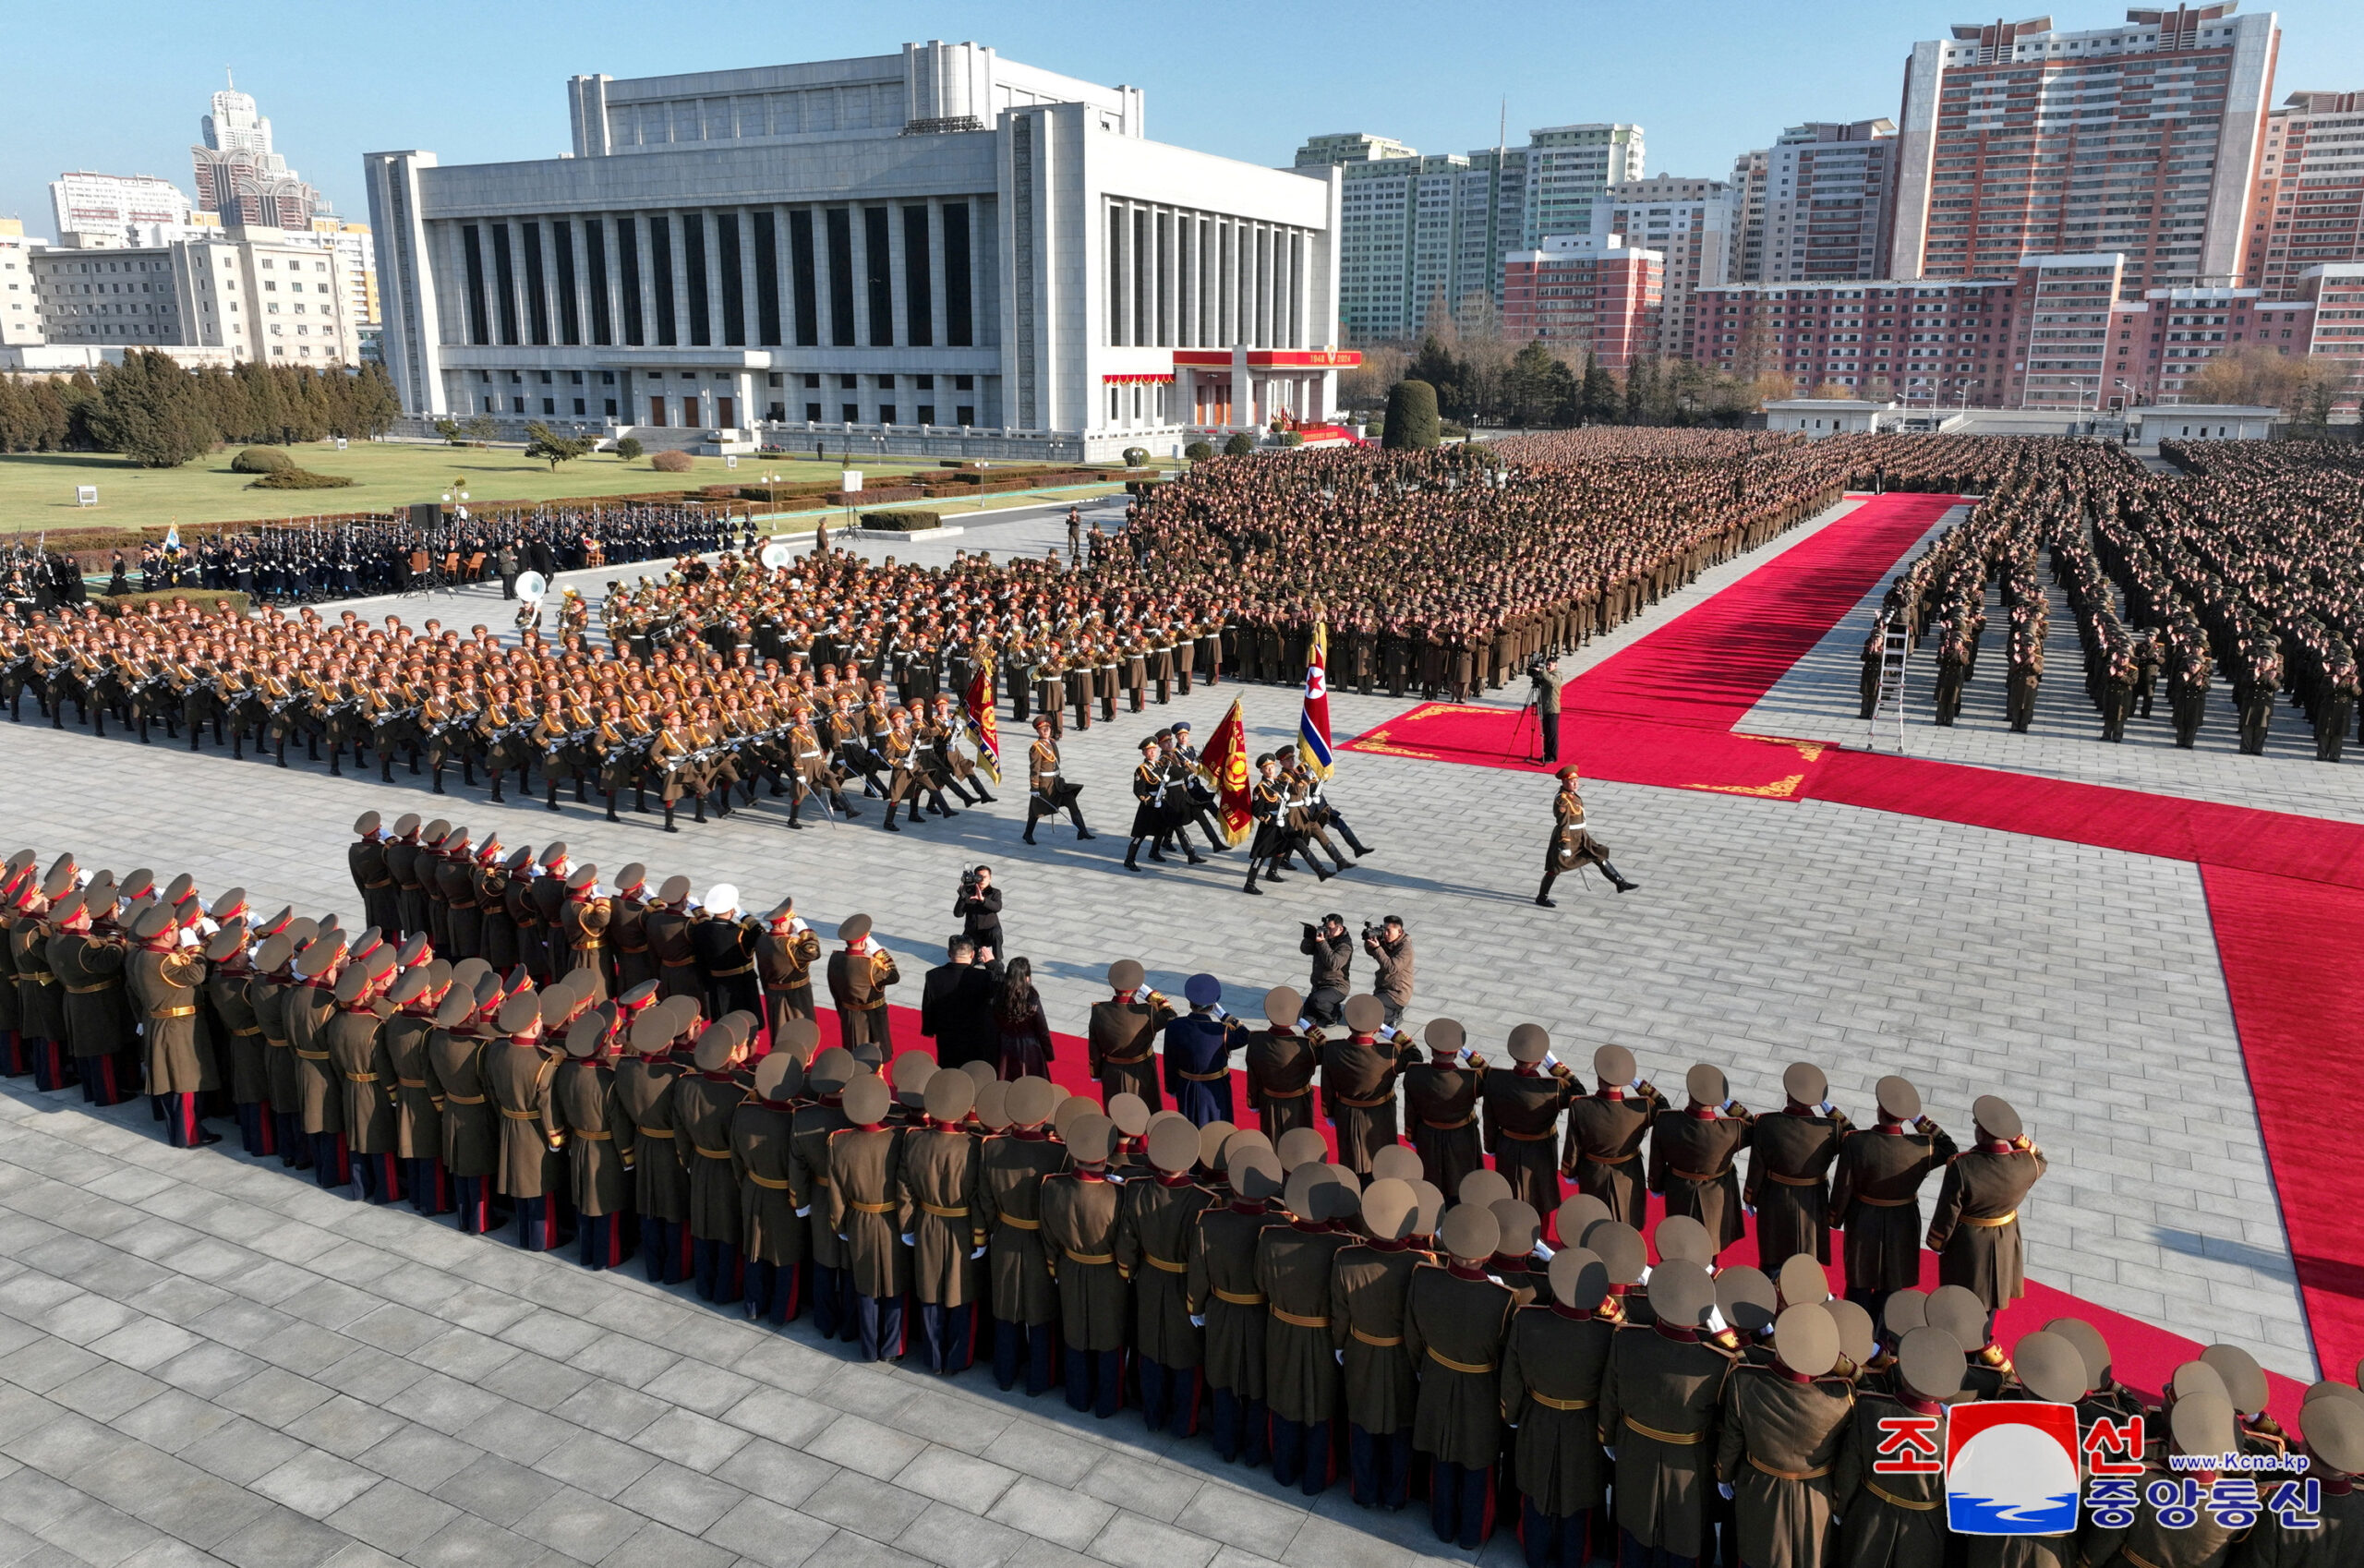 European nations eye reopening North Korea embassies post-pandemic